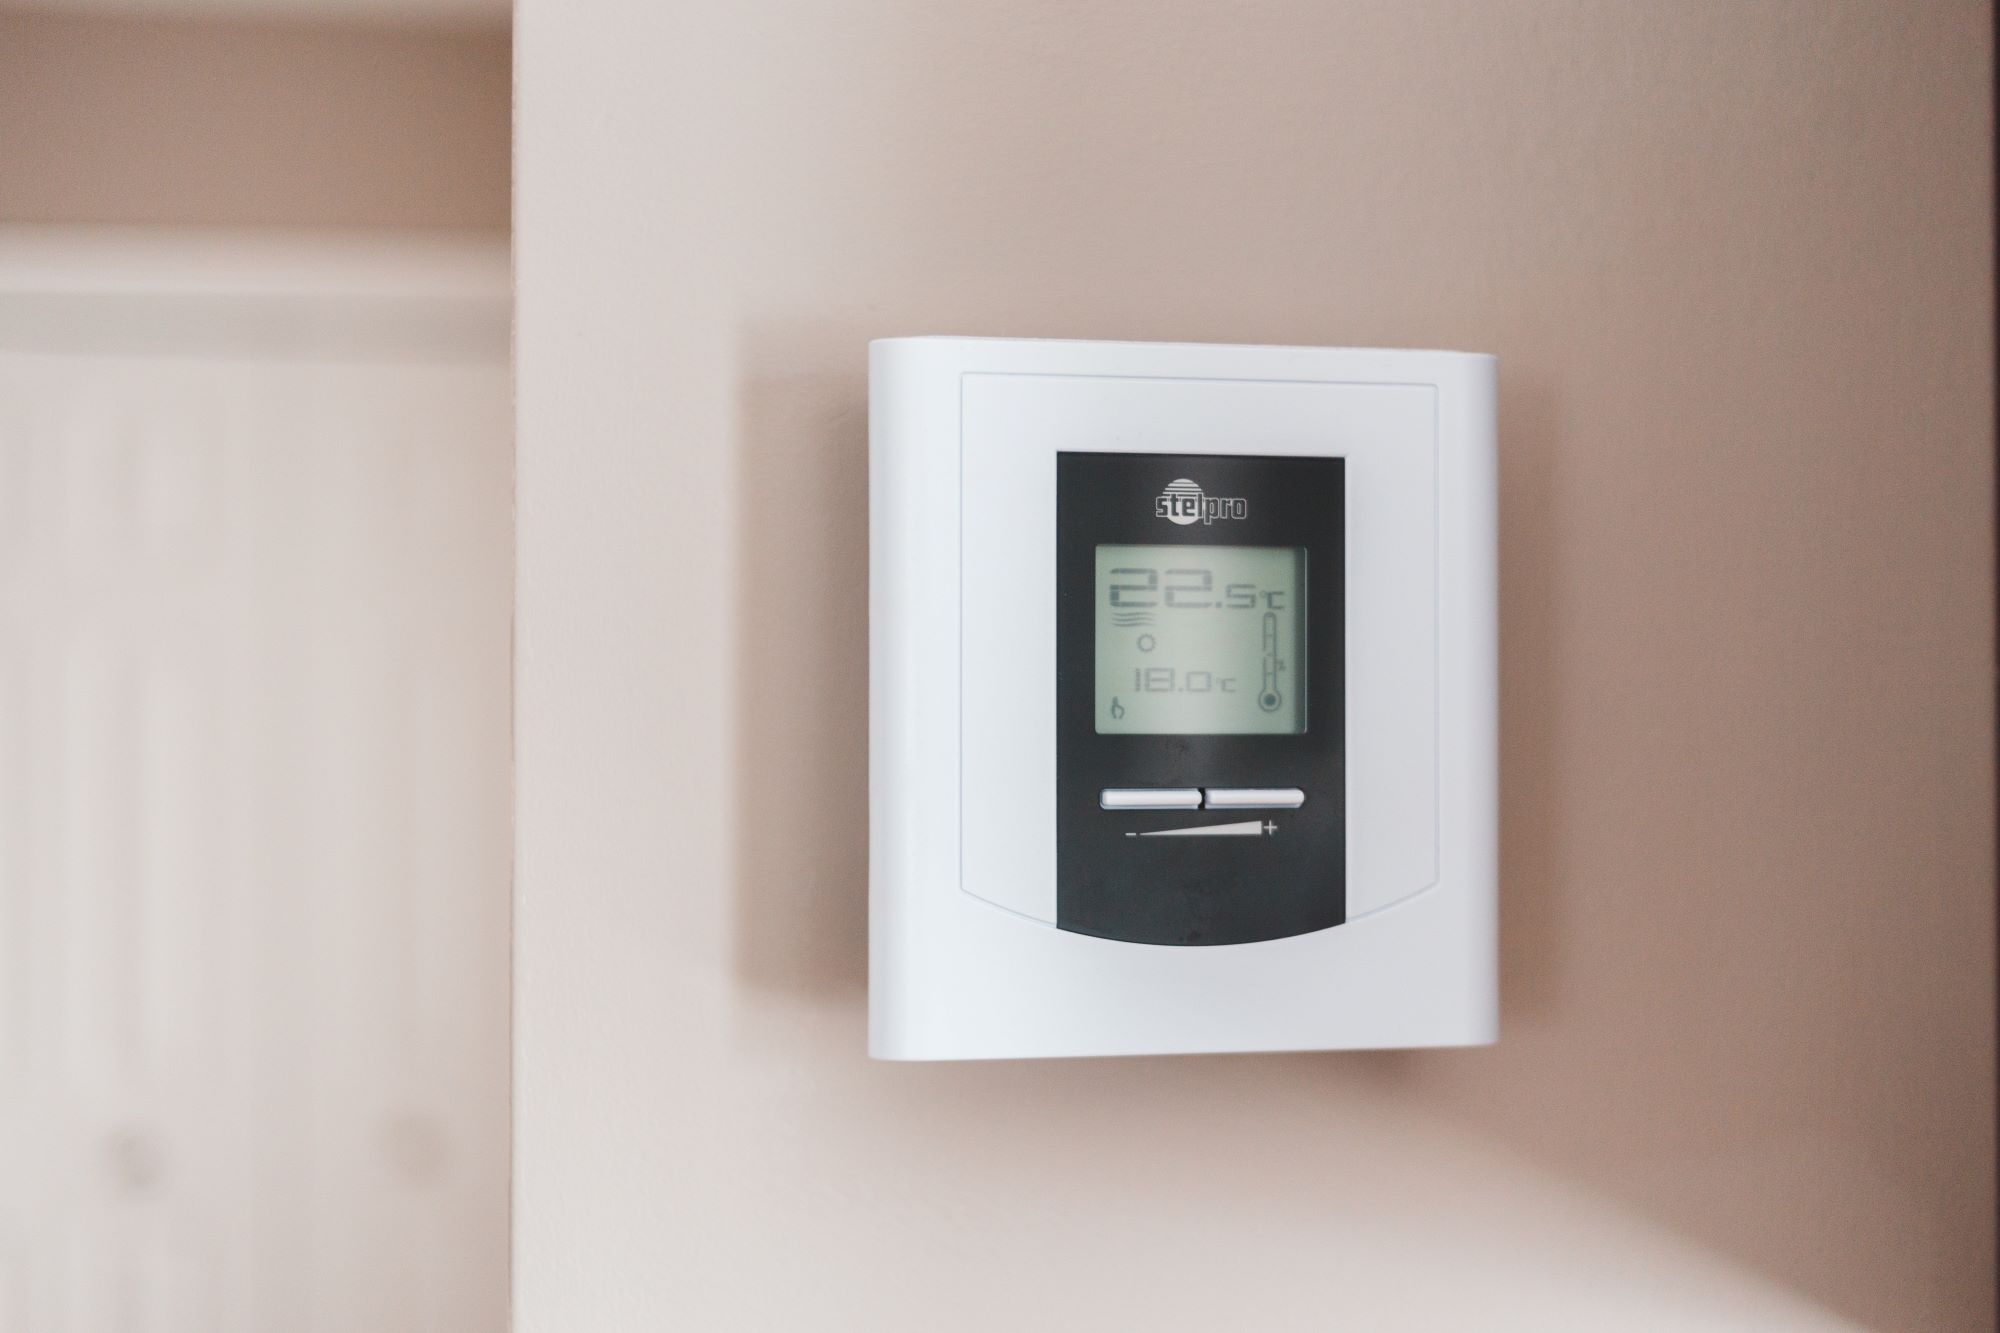 California Green Building Code (CALGreen) – Lighting and thermal comfort controls